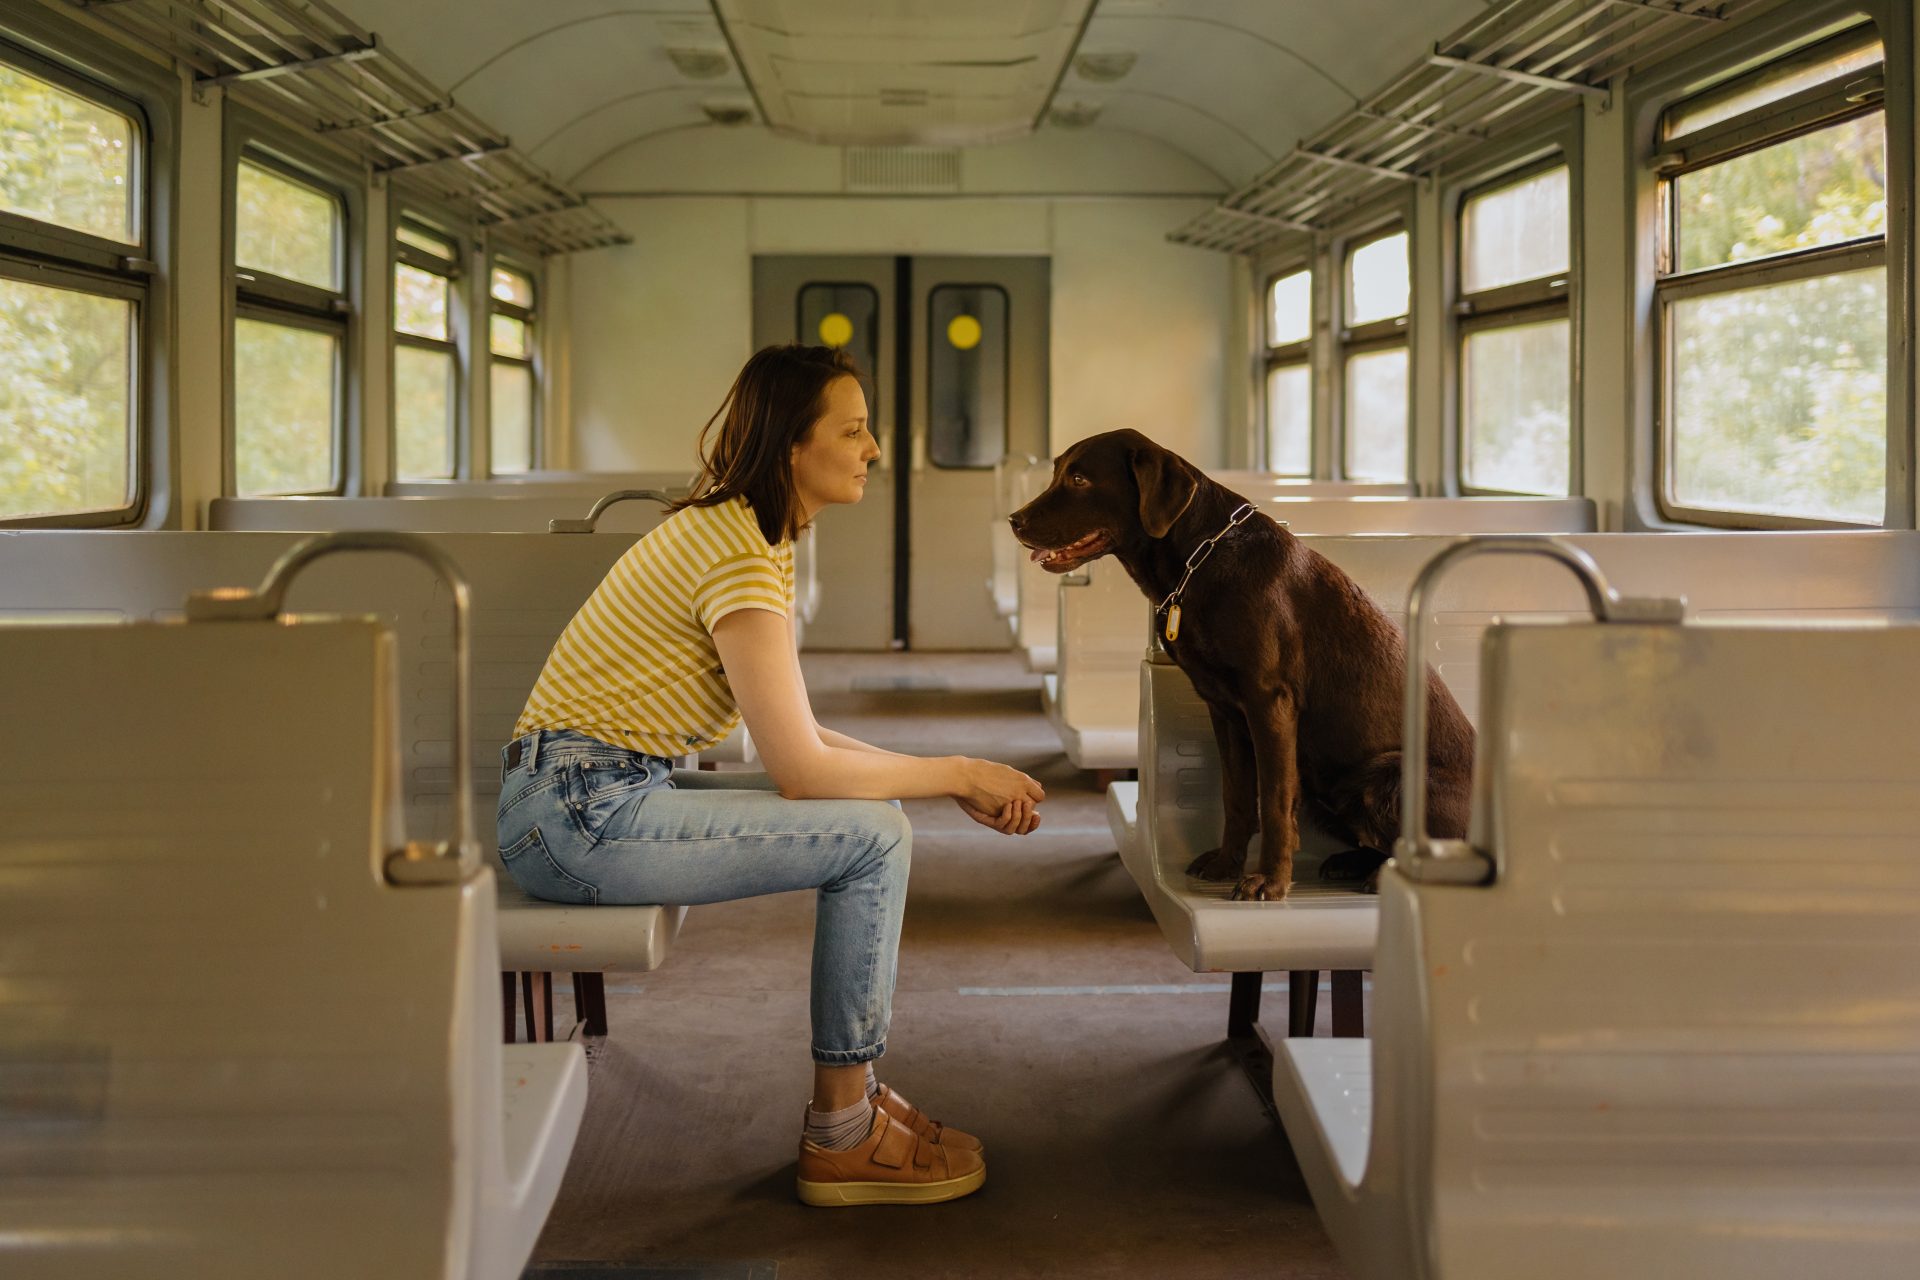 Psychiatric Service Dog on a train